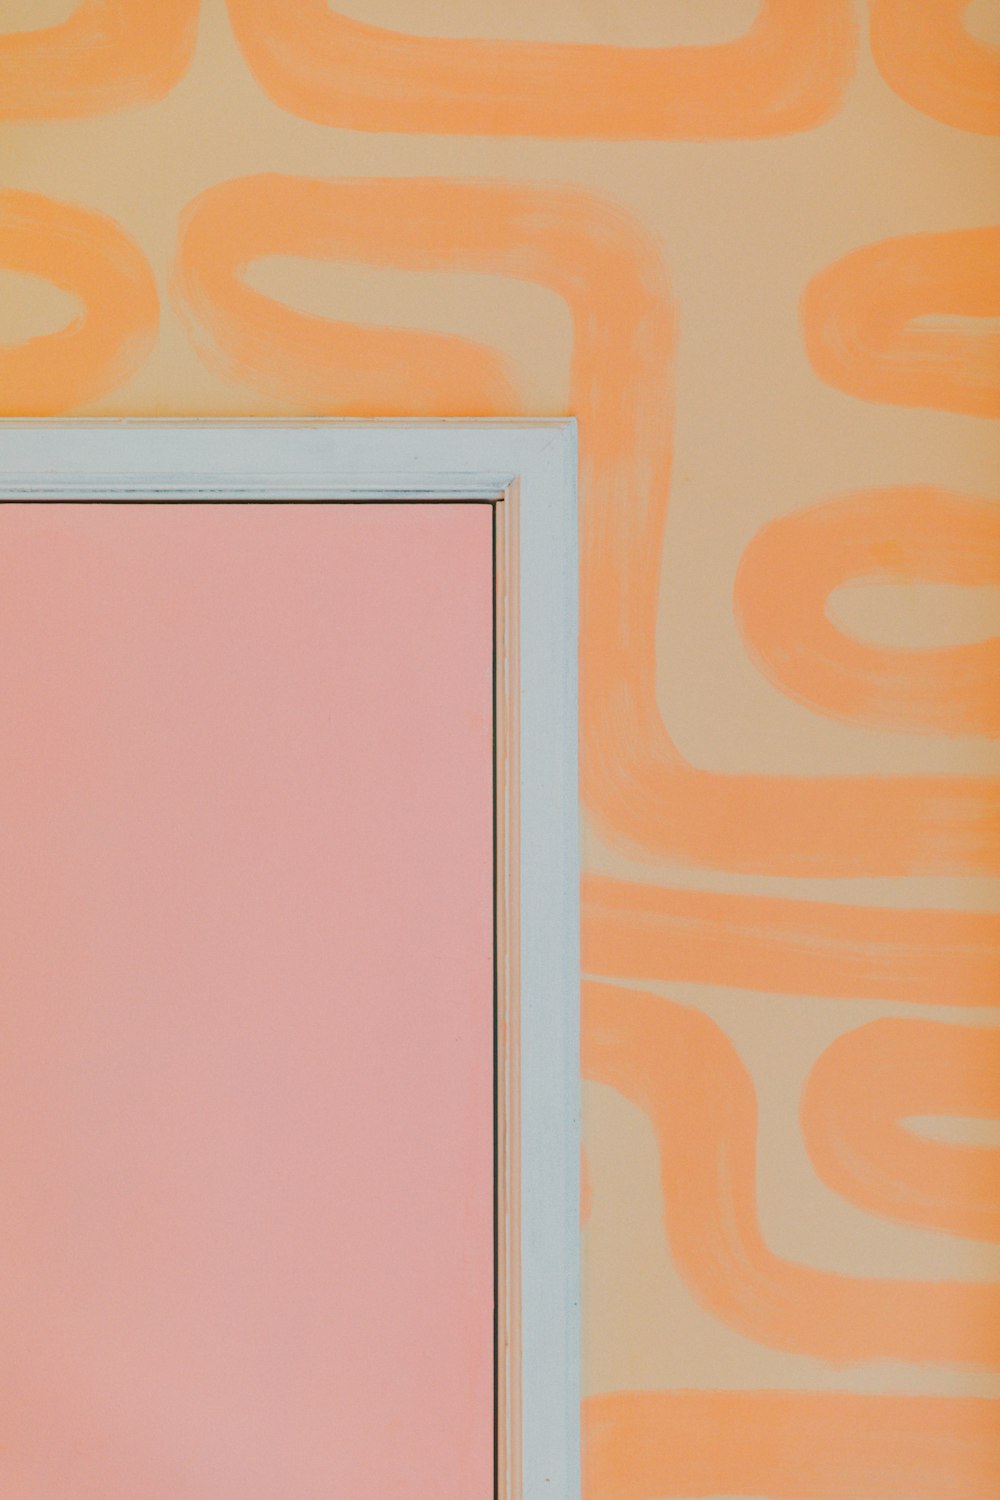 white wooden frame on orange wall